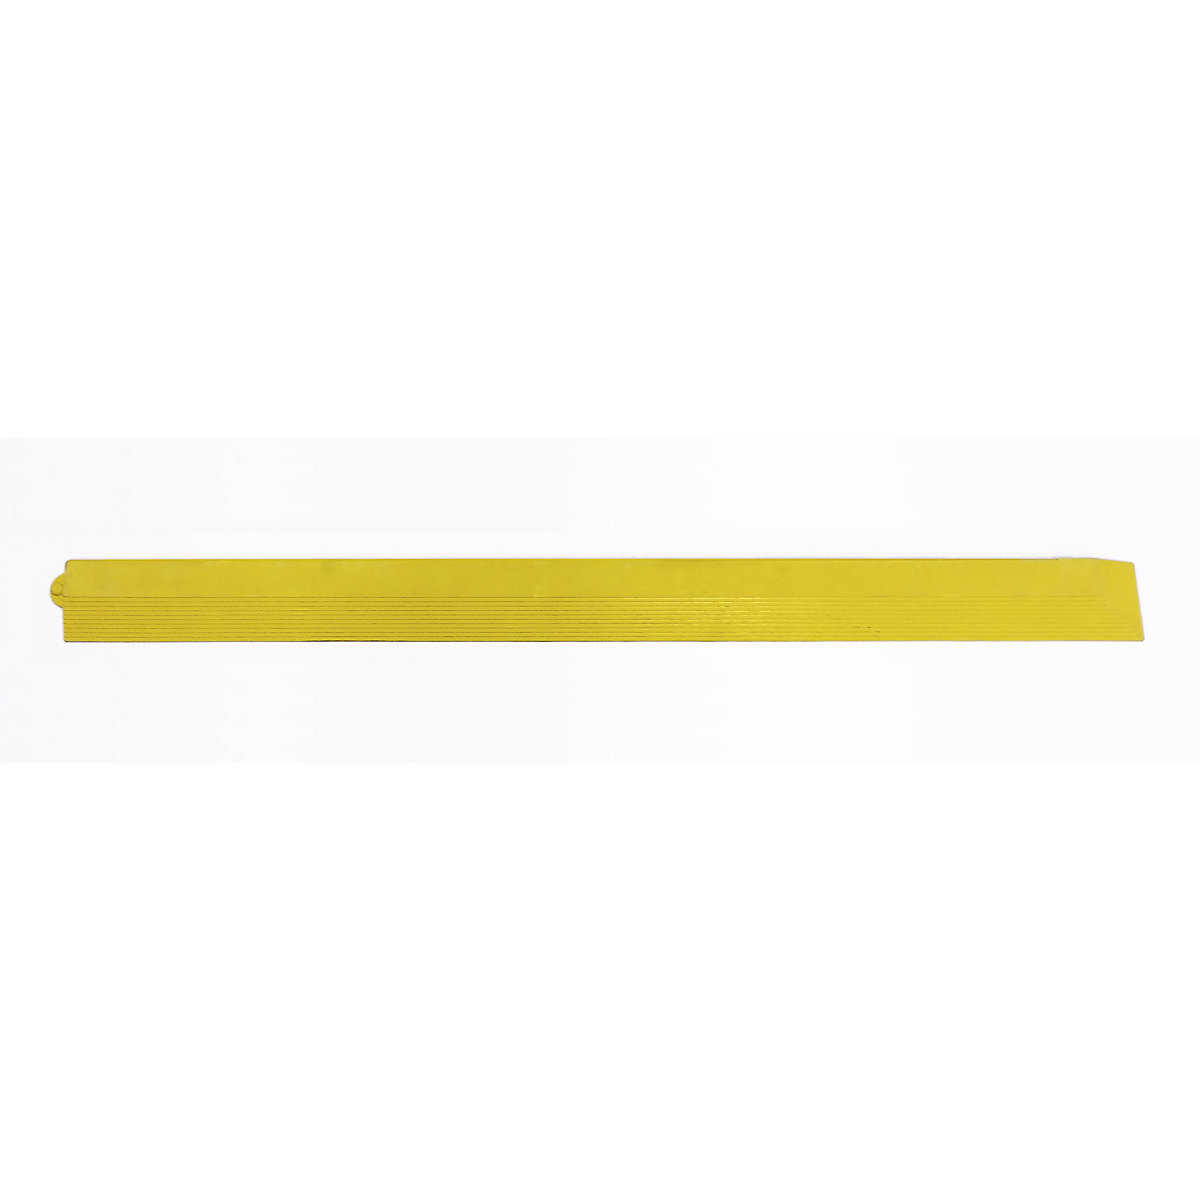 Listón de borde NBR, L x A x H 965 x 65 x 17 mm, amarillo, incluida esquina, hembra